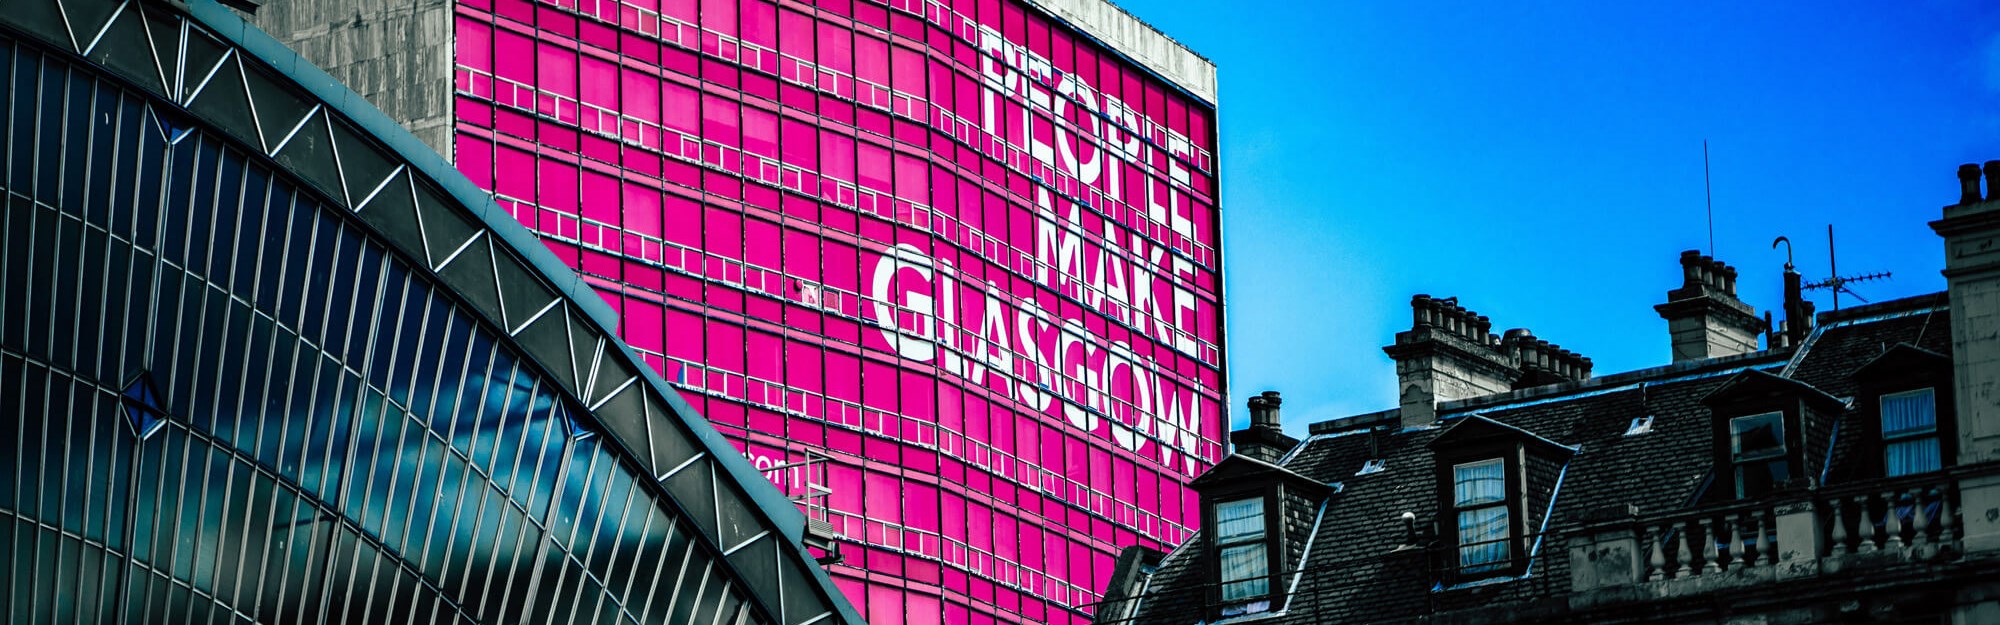 People make Glasgow sign on side of building